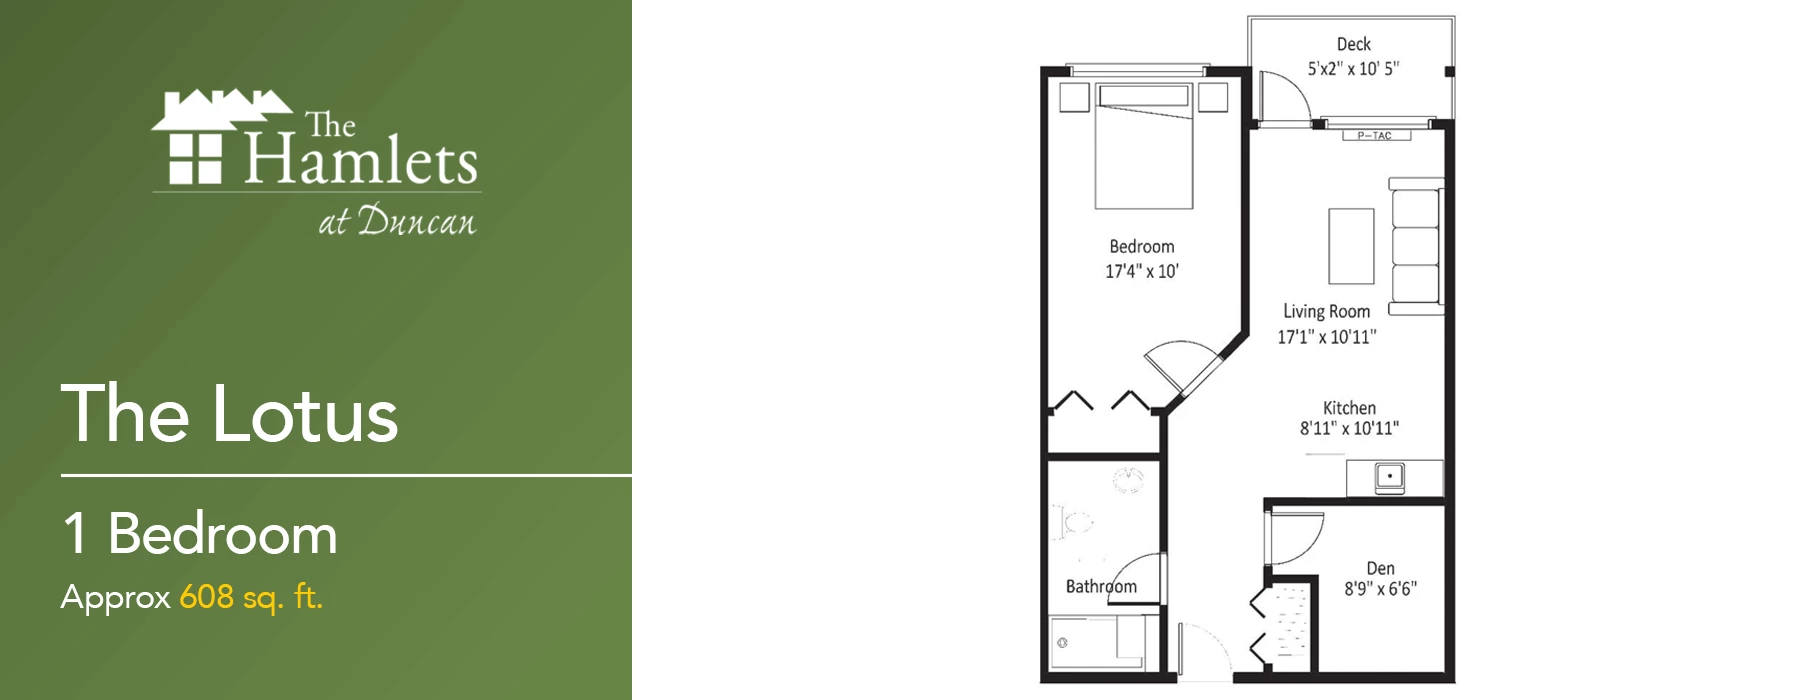 Our Lotus plan - One bedroom senior apartment